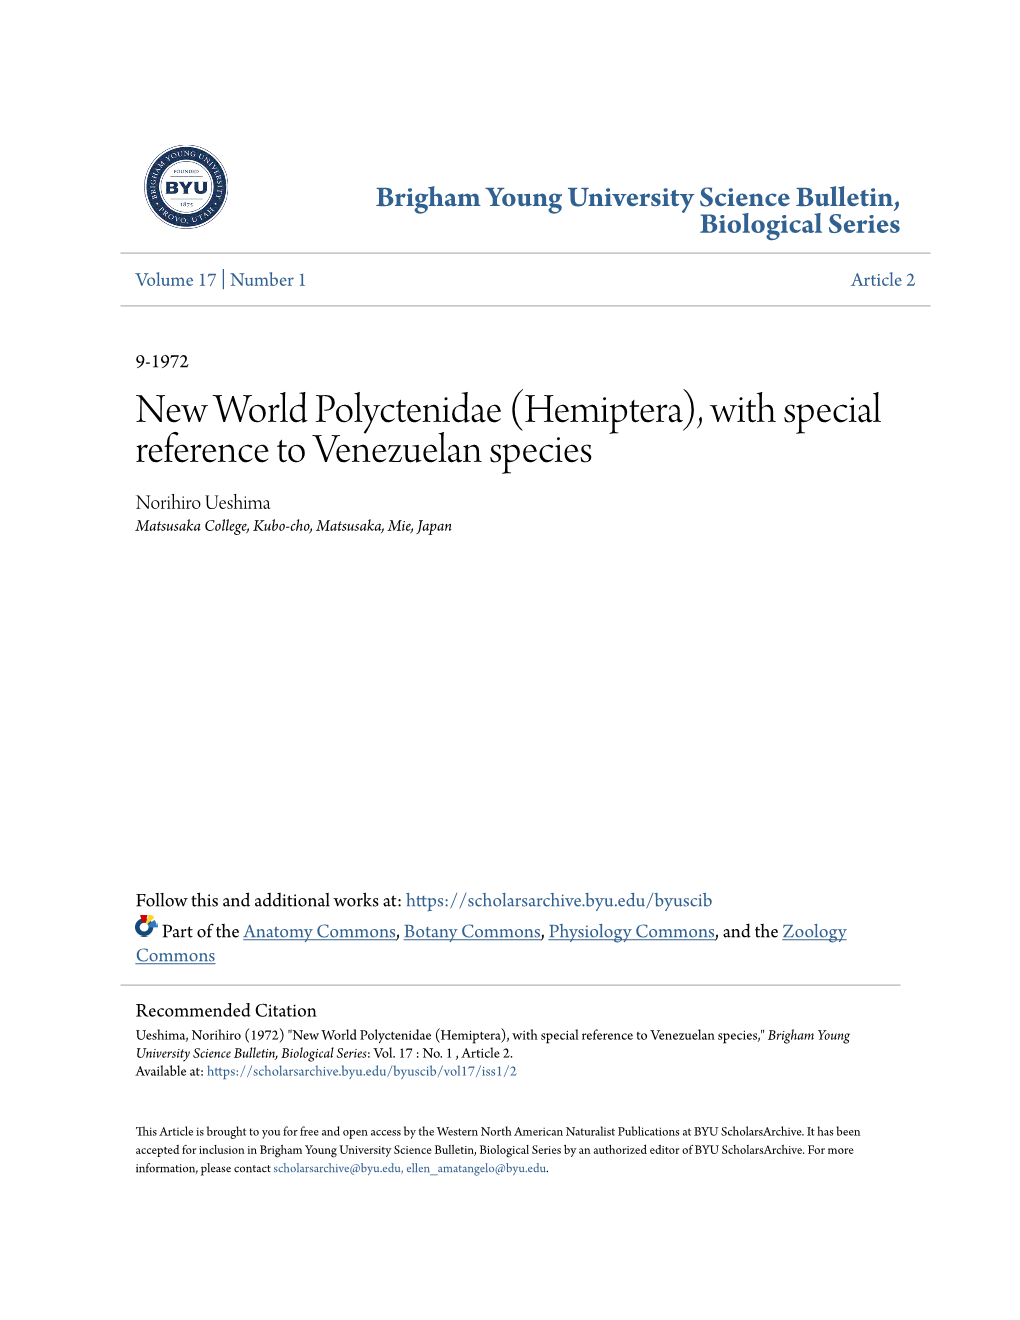 New World Polyctenidae (Hemiptera), with Special Reference to Venezuelan Species Norihiro Ueshima Matsusaka College, Kubo-Cho, Matsusaka, Mie, Japan